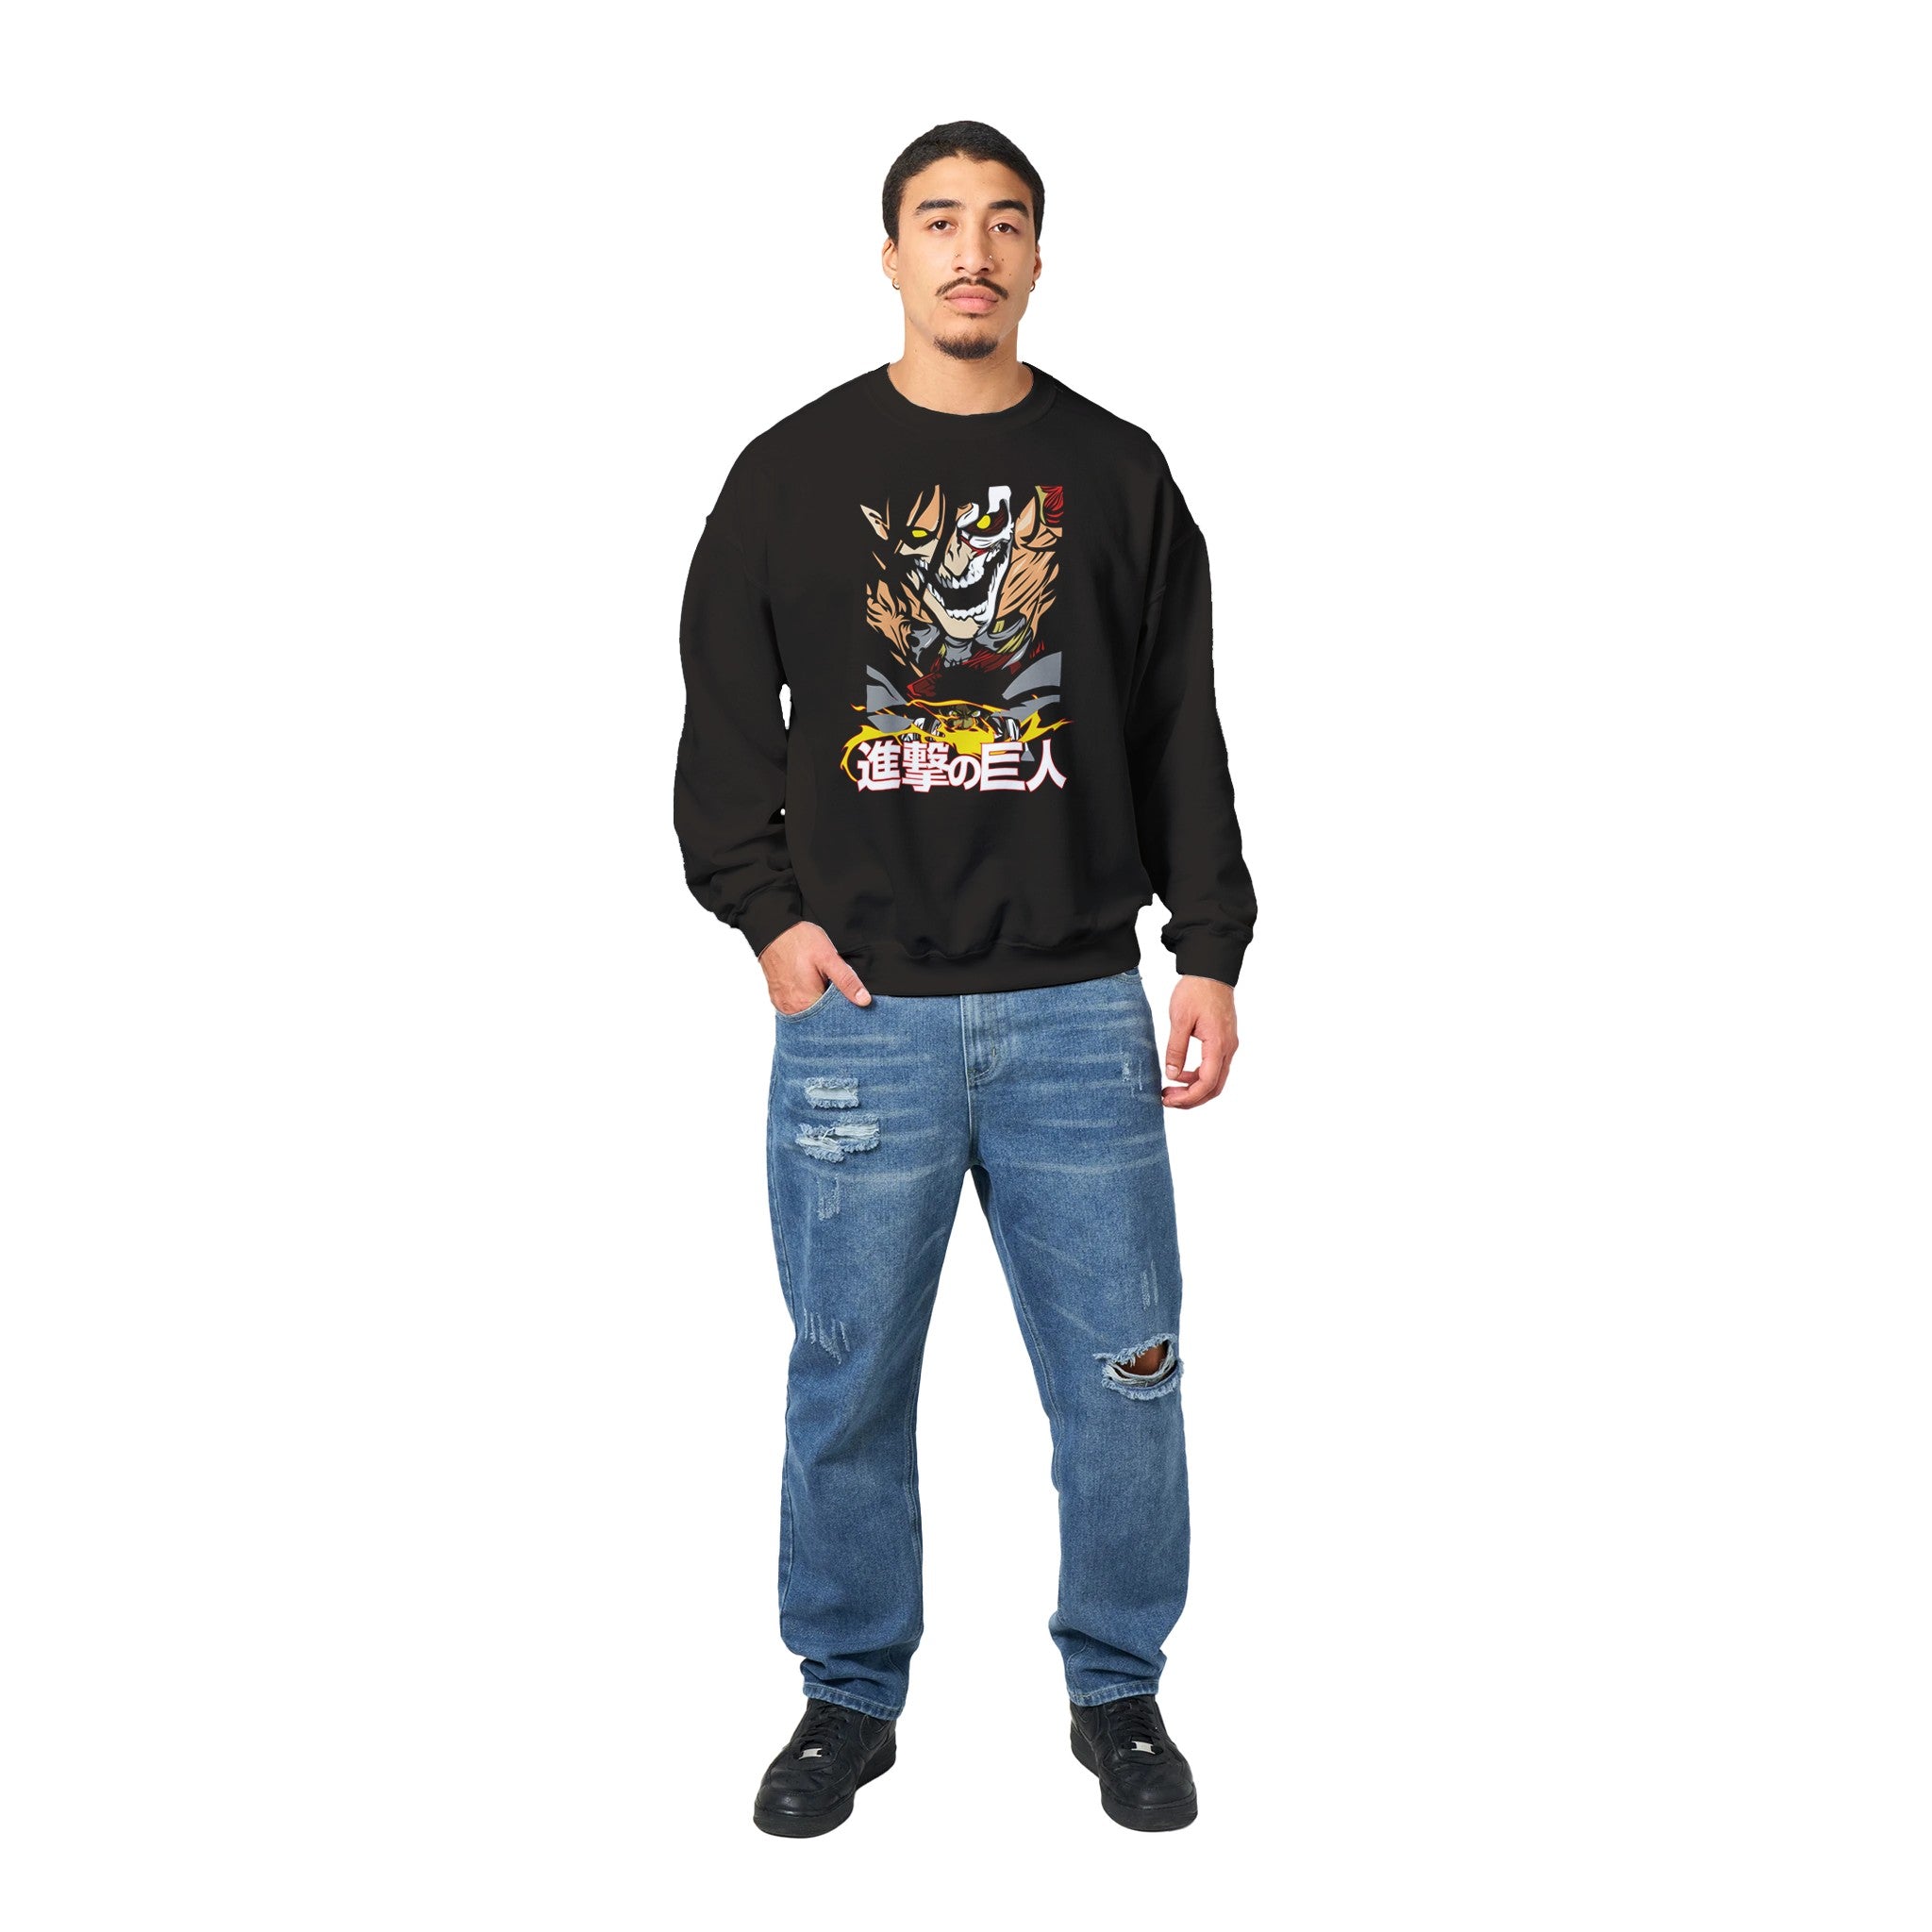 shop and buy attack on titan anime clothing erens titan sweatshirt/longsleeve/jumper